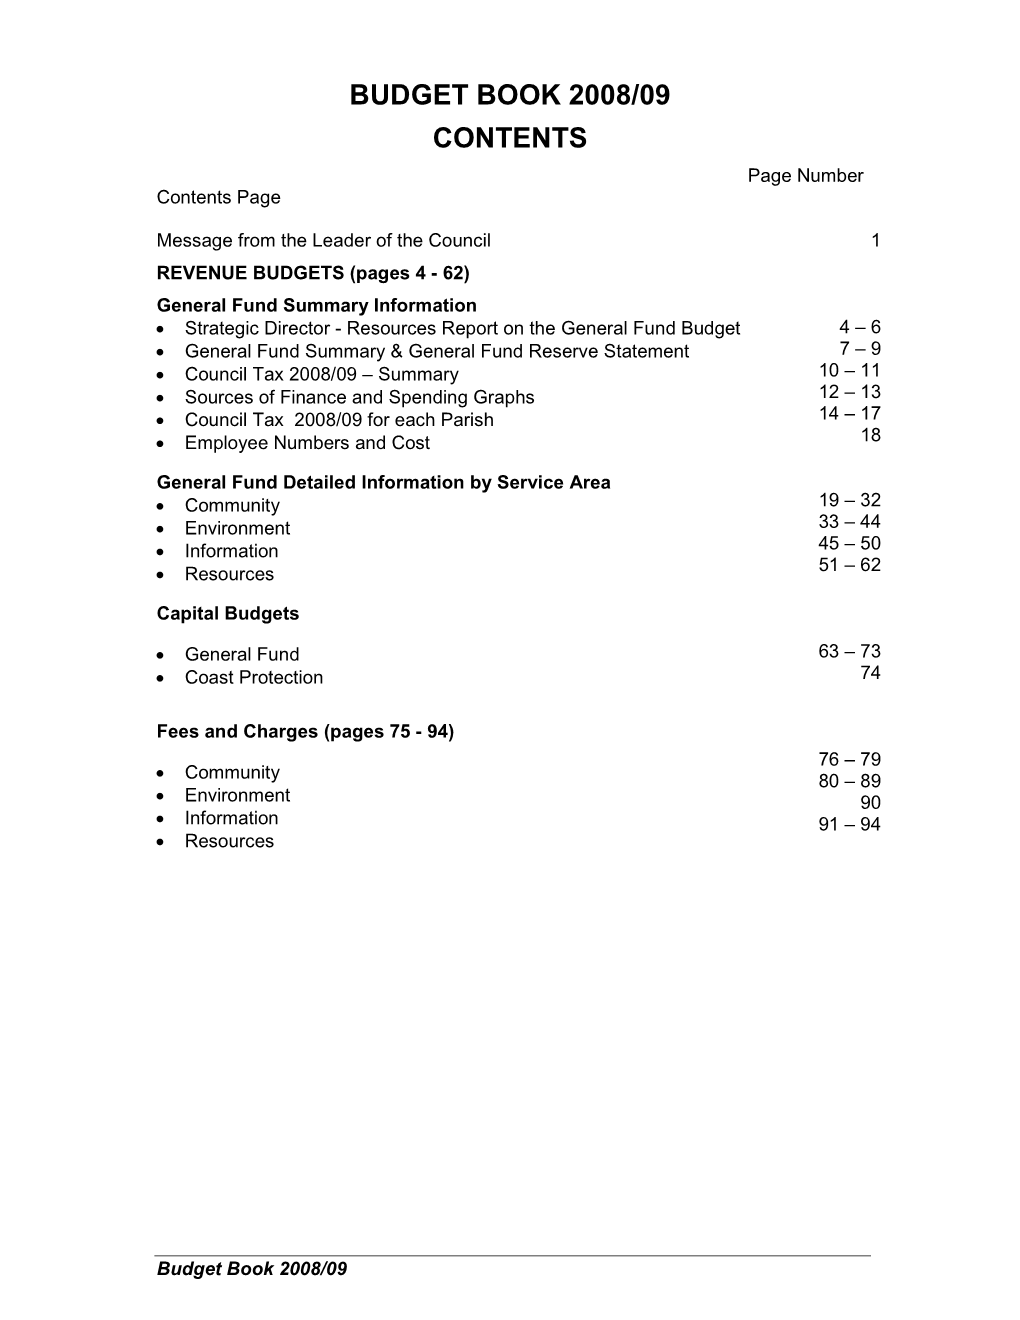 Budget Book 2008/09 Contents